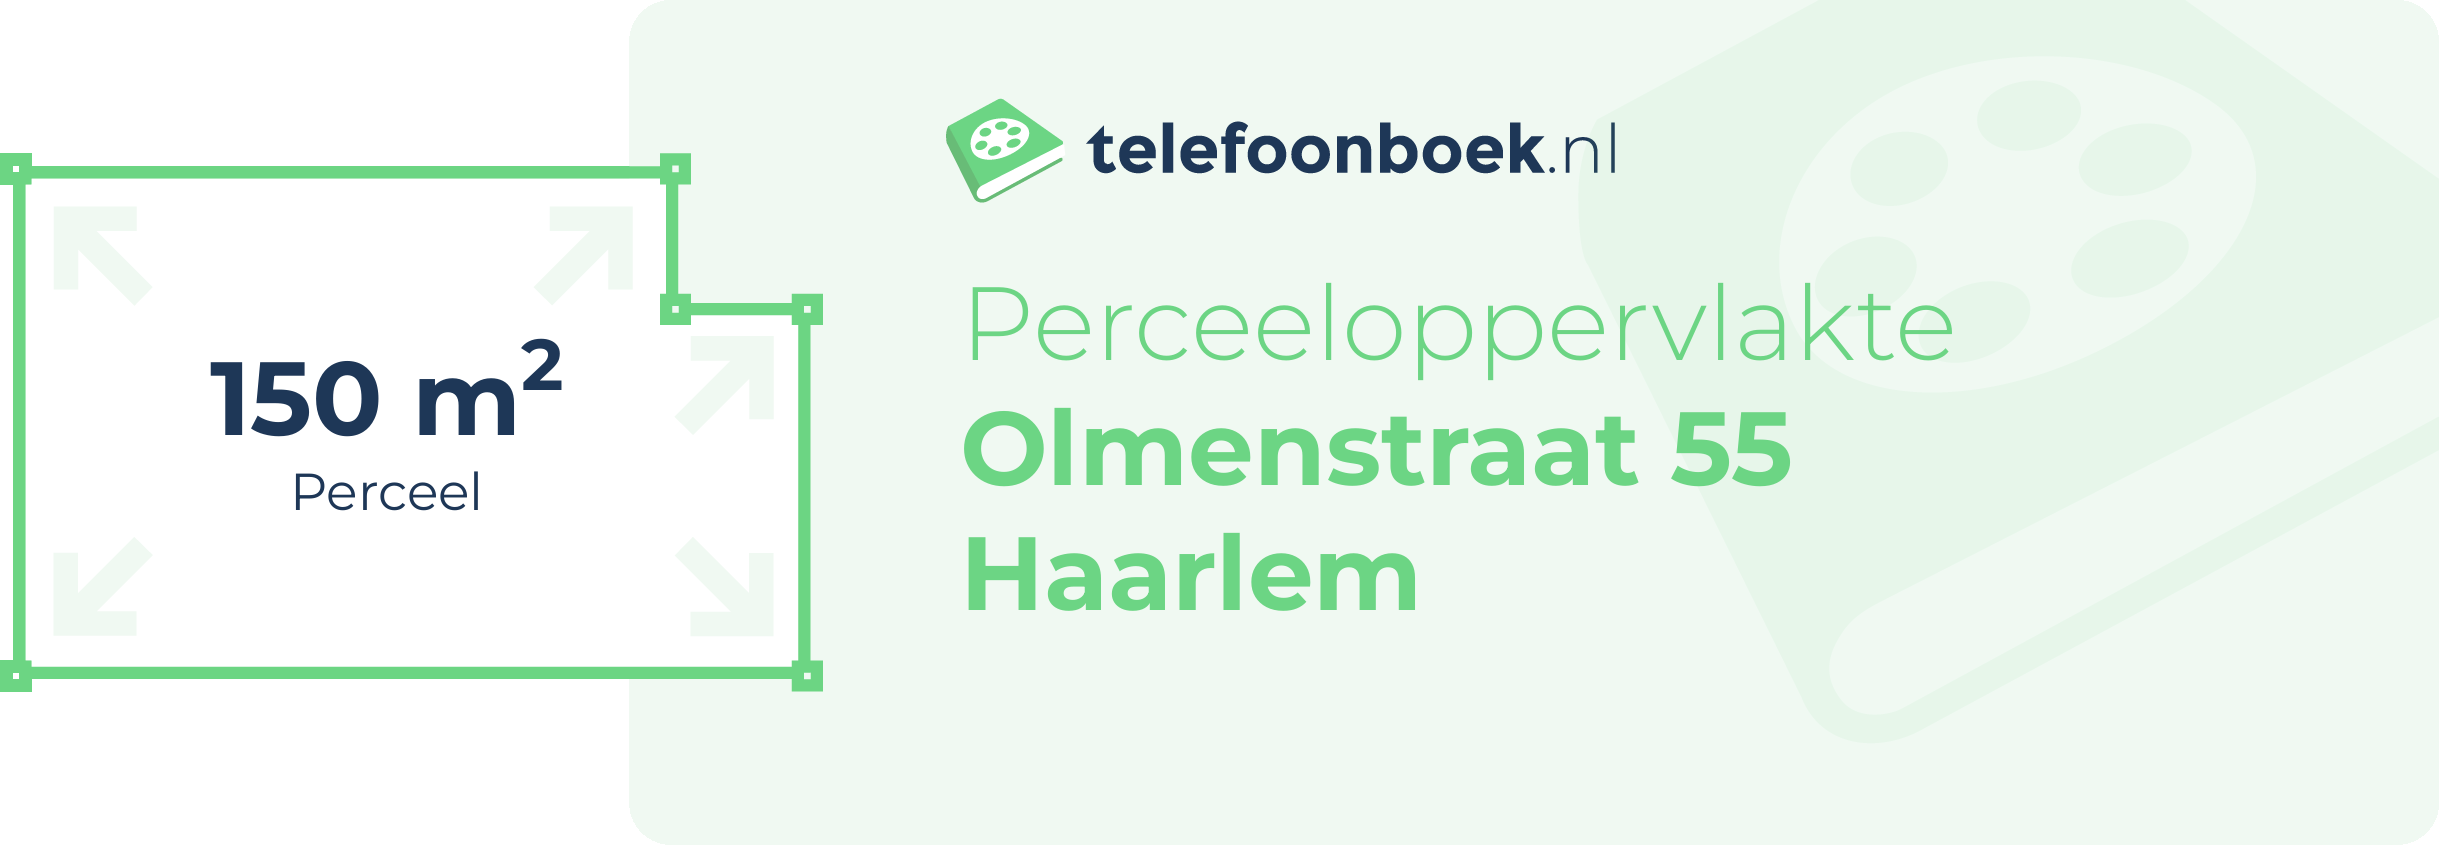 Perceeloppervlakte Olmenstraat 55 Haarlem